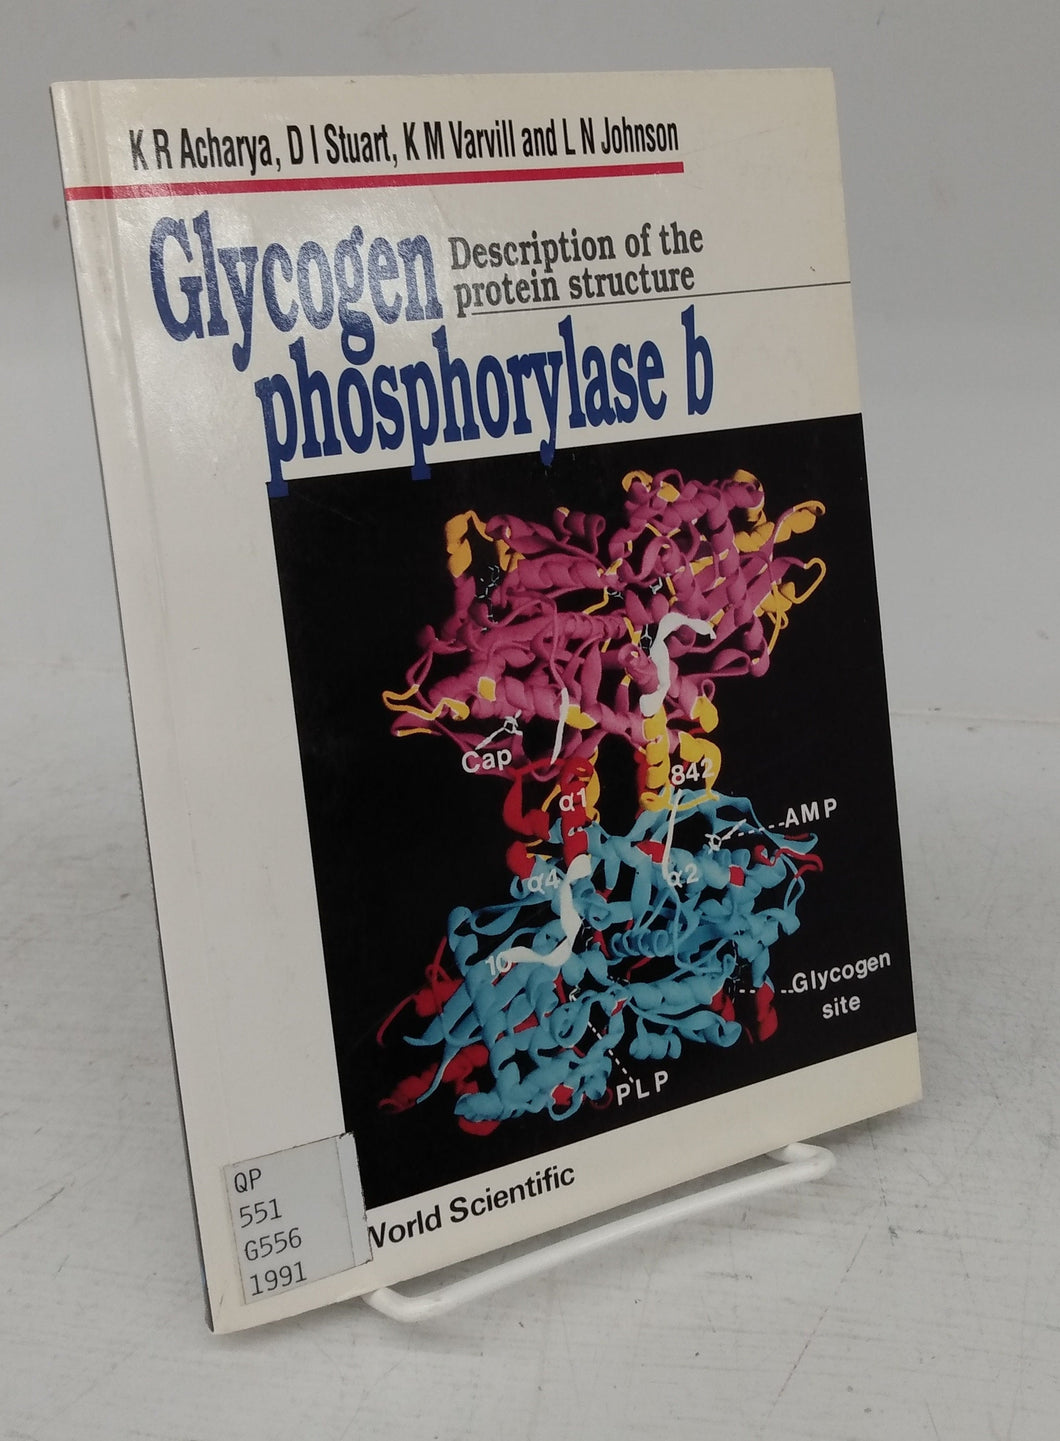 Glycogen phosphorylase b: Description of the protein structure